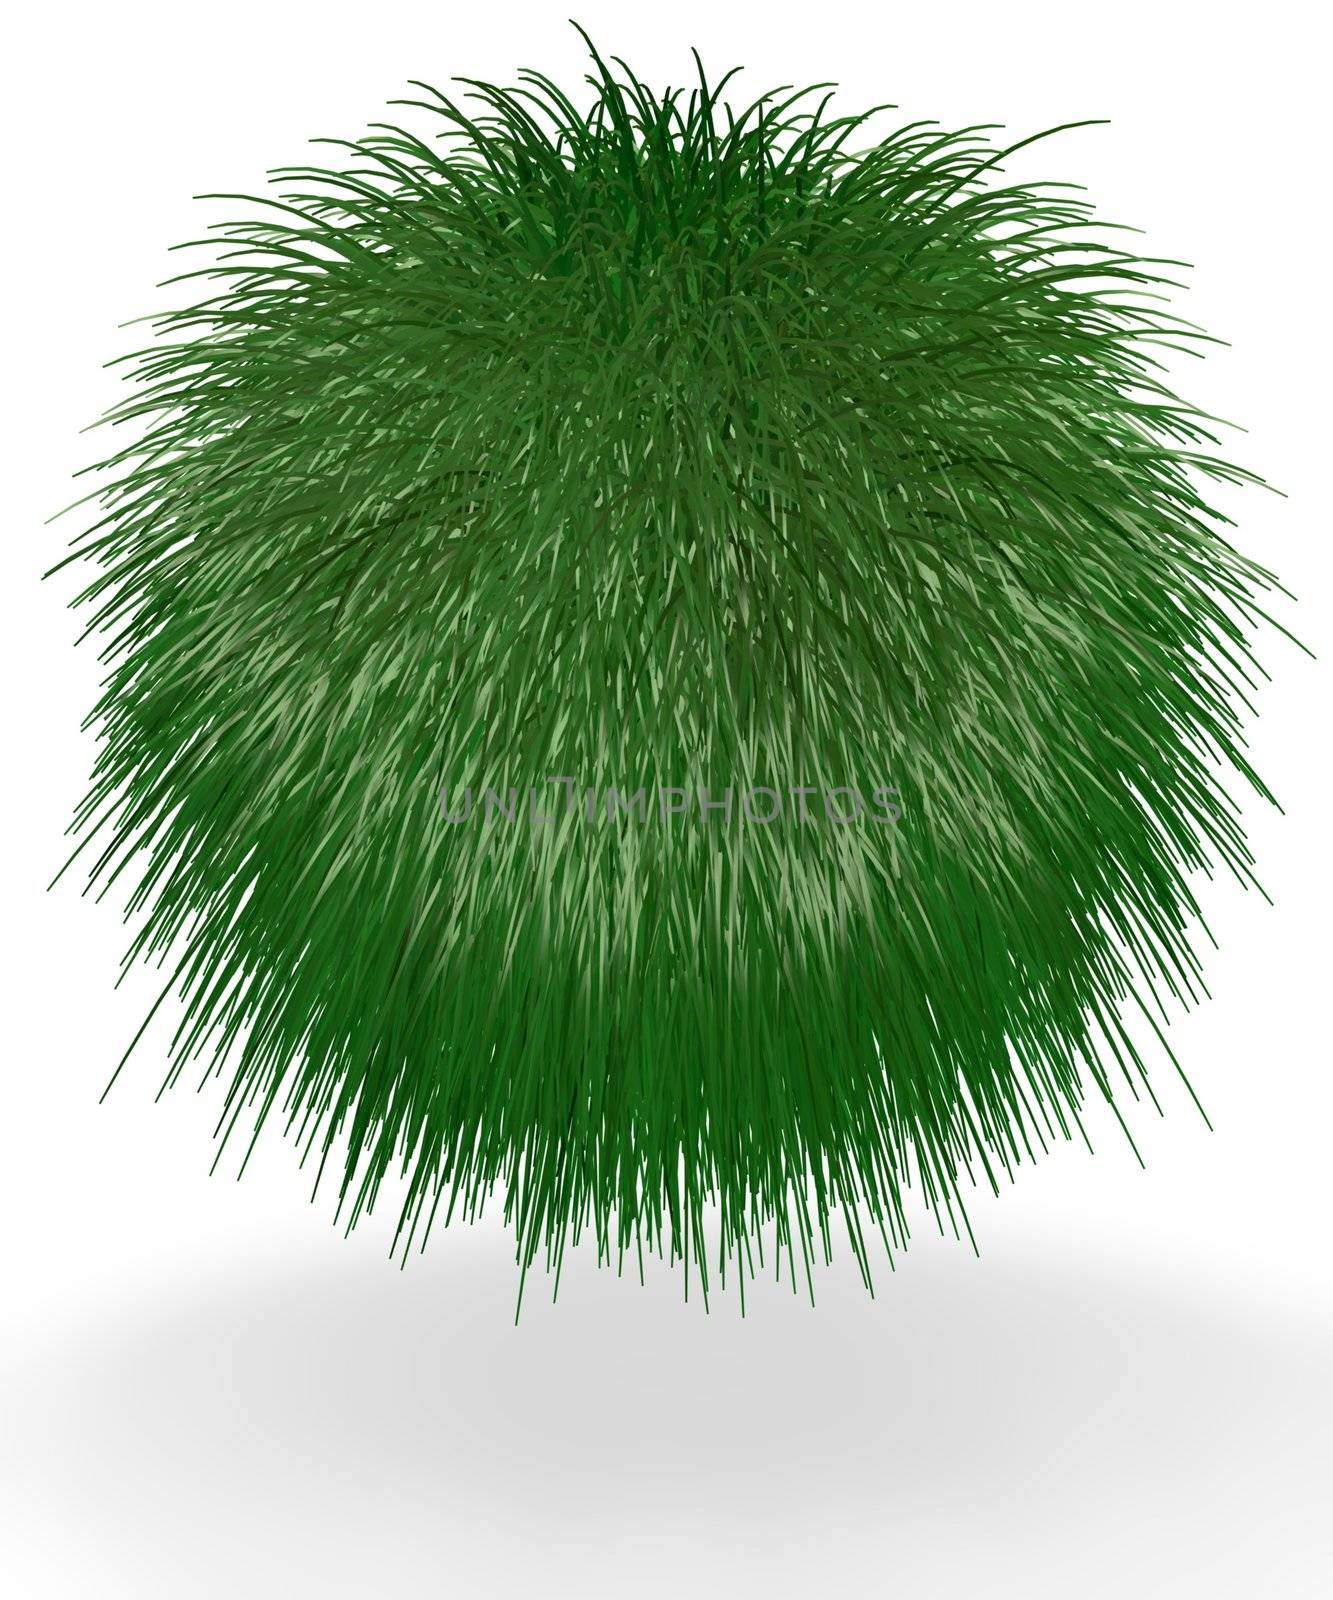 Ball of Green Long Grass by LeoBlanchette